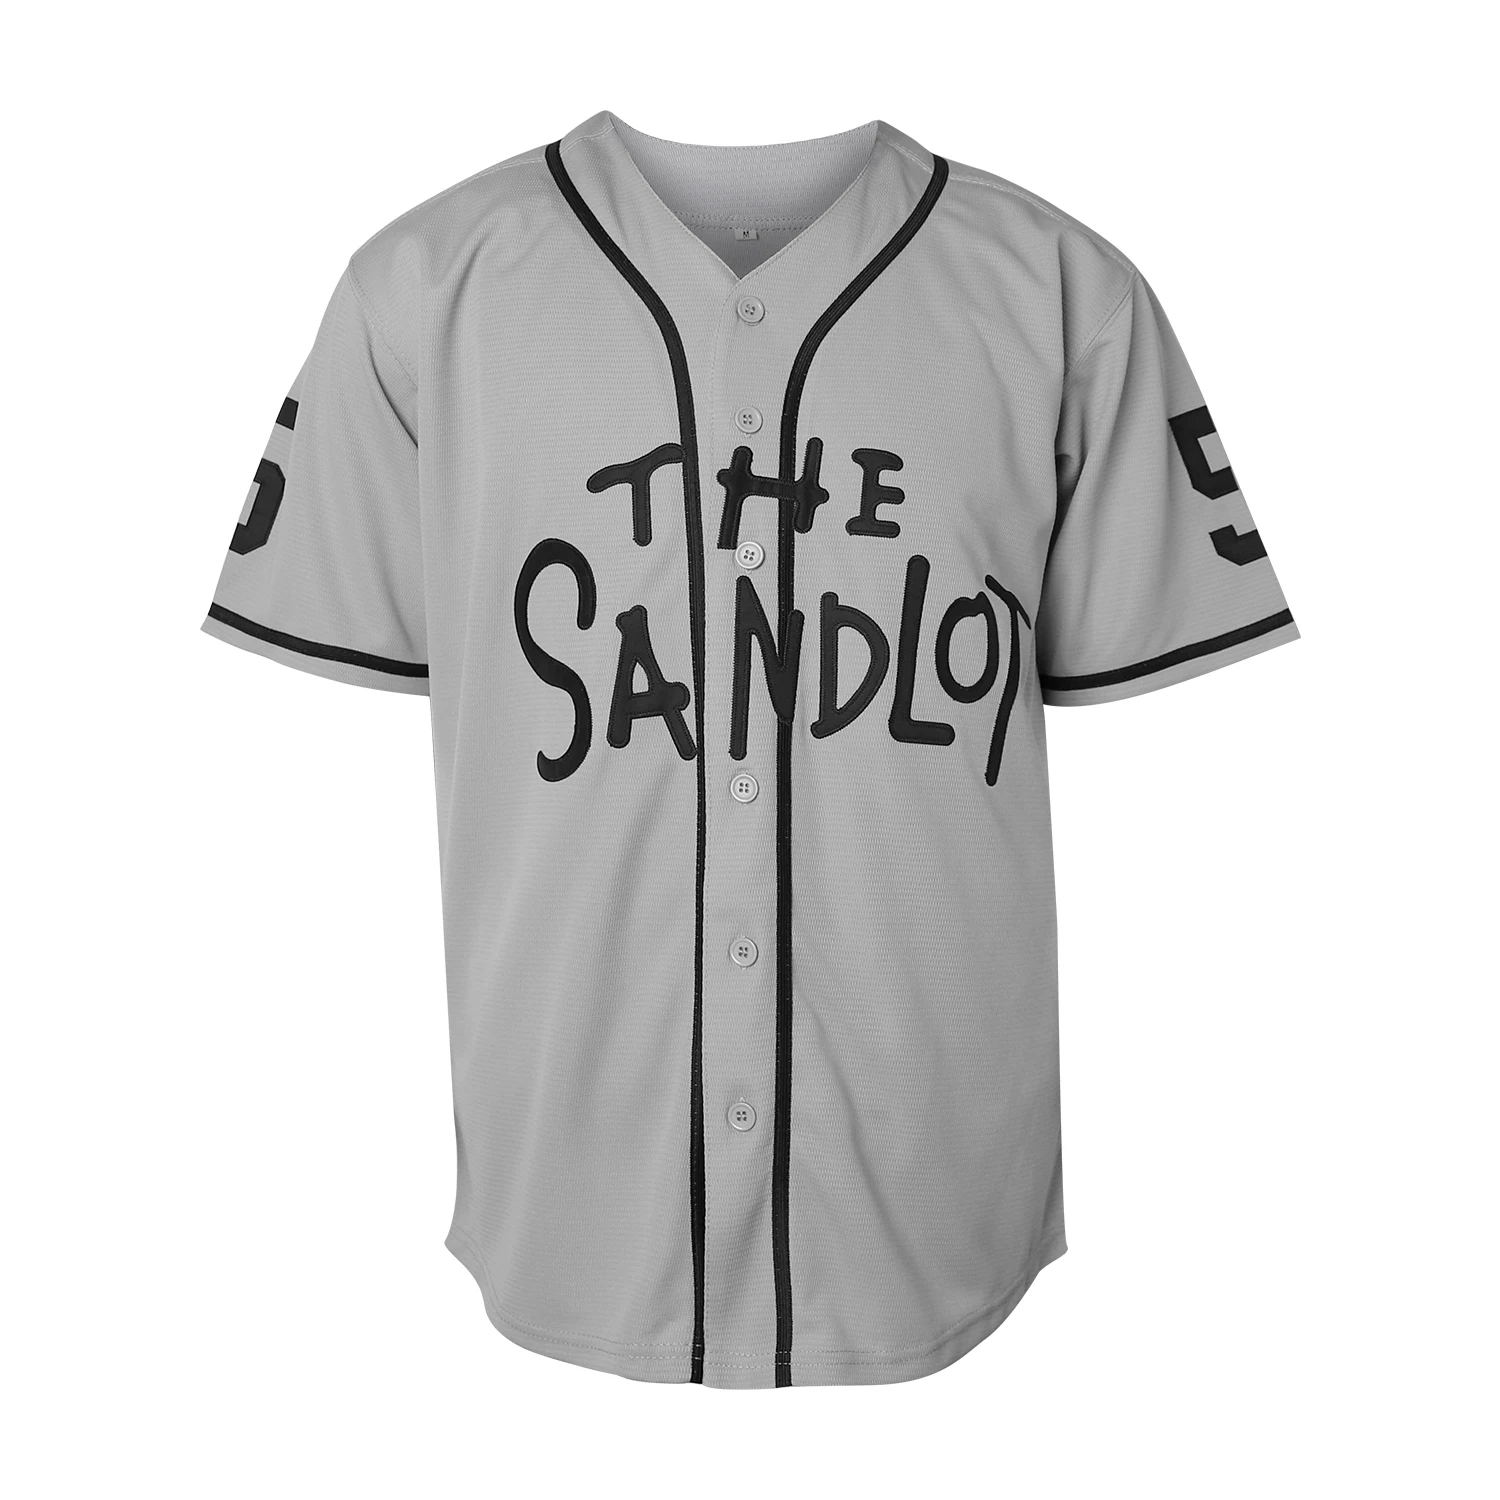 Benny The Jet Rodriguez Jersey T-Shirt Sandlot Costume SL Baseball Movie